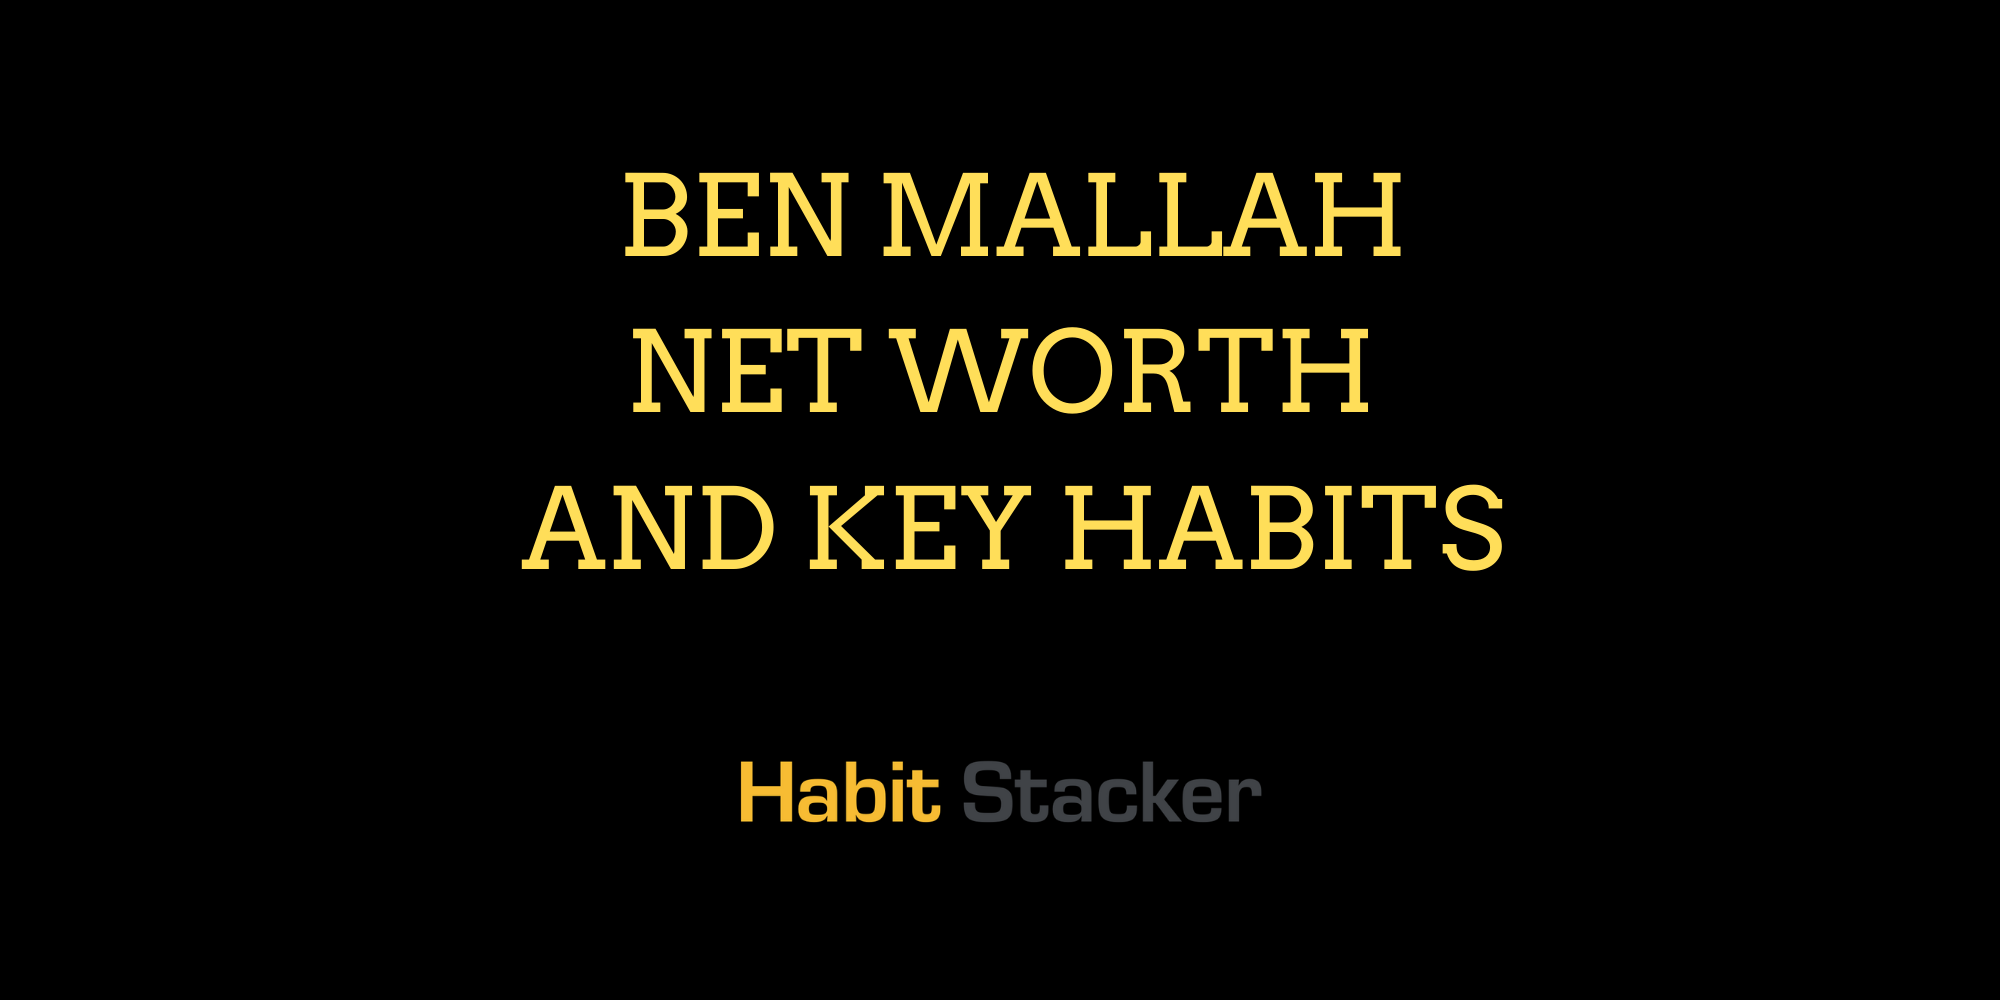 Ben Mallah Net Worth and Key Habits